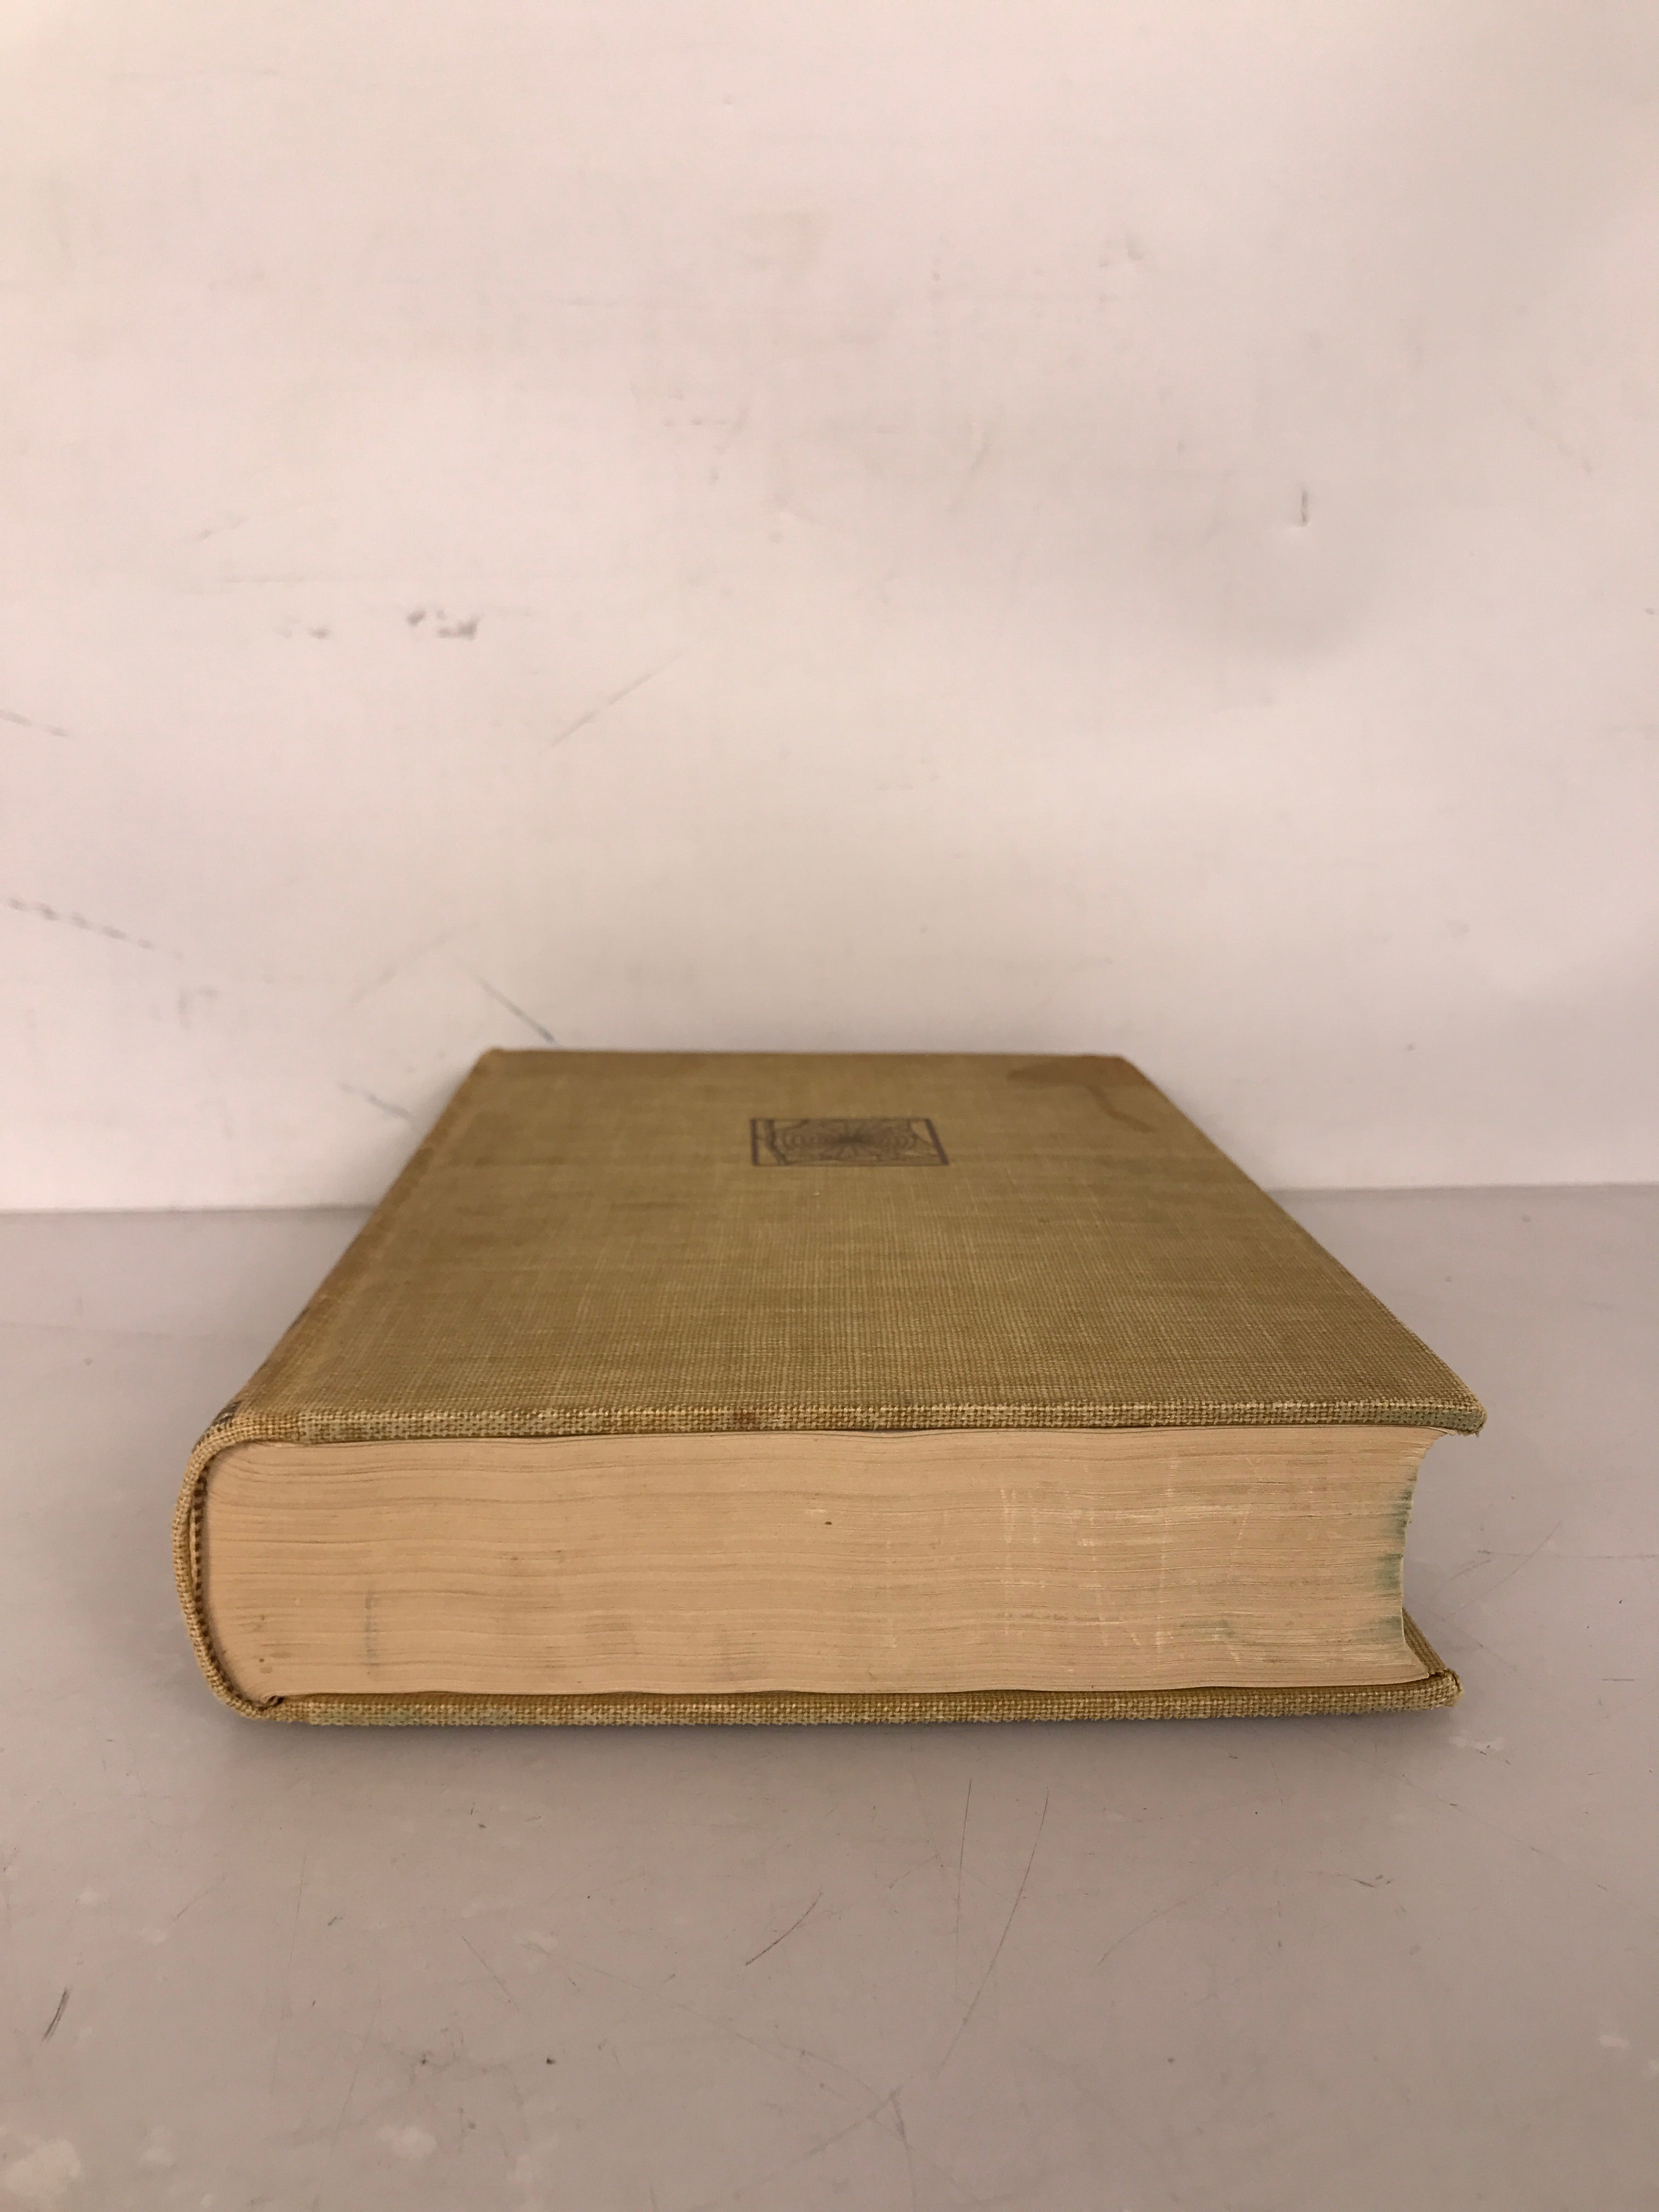 Handbook of Nature Study by Anna Botsford Comstock 1941 HC